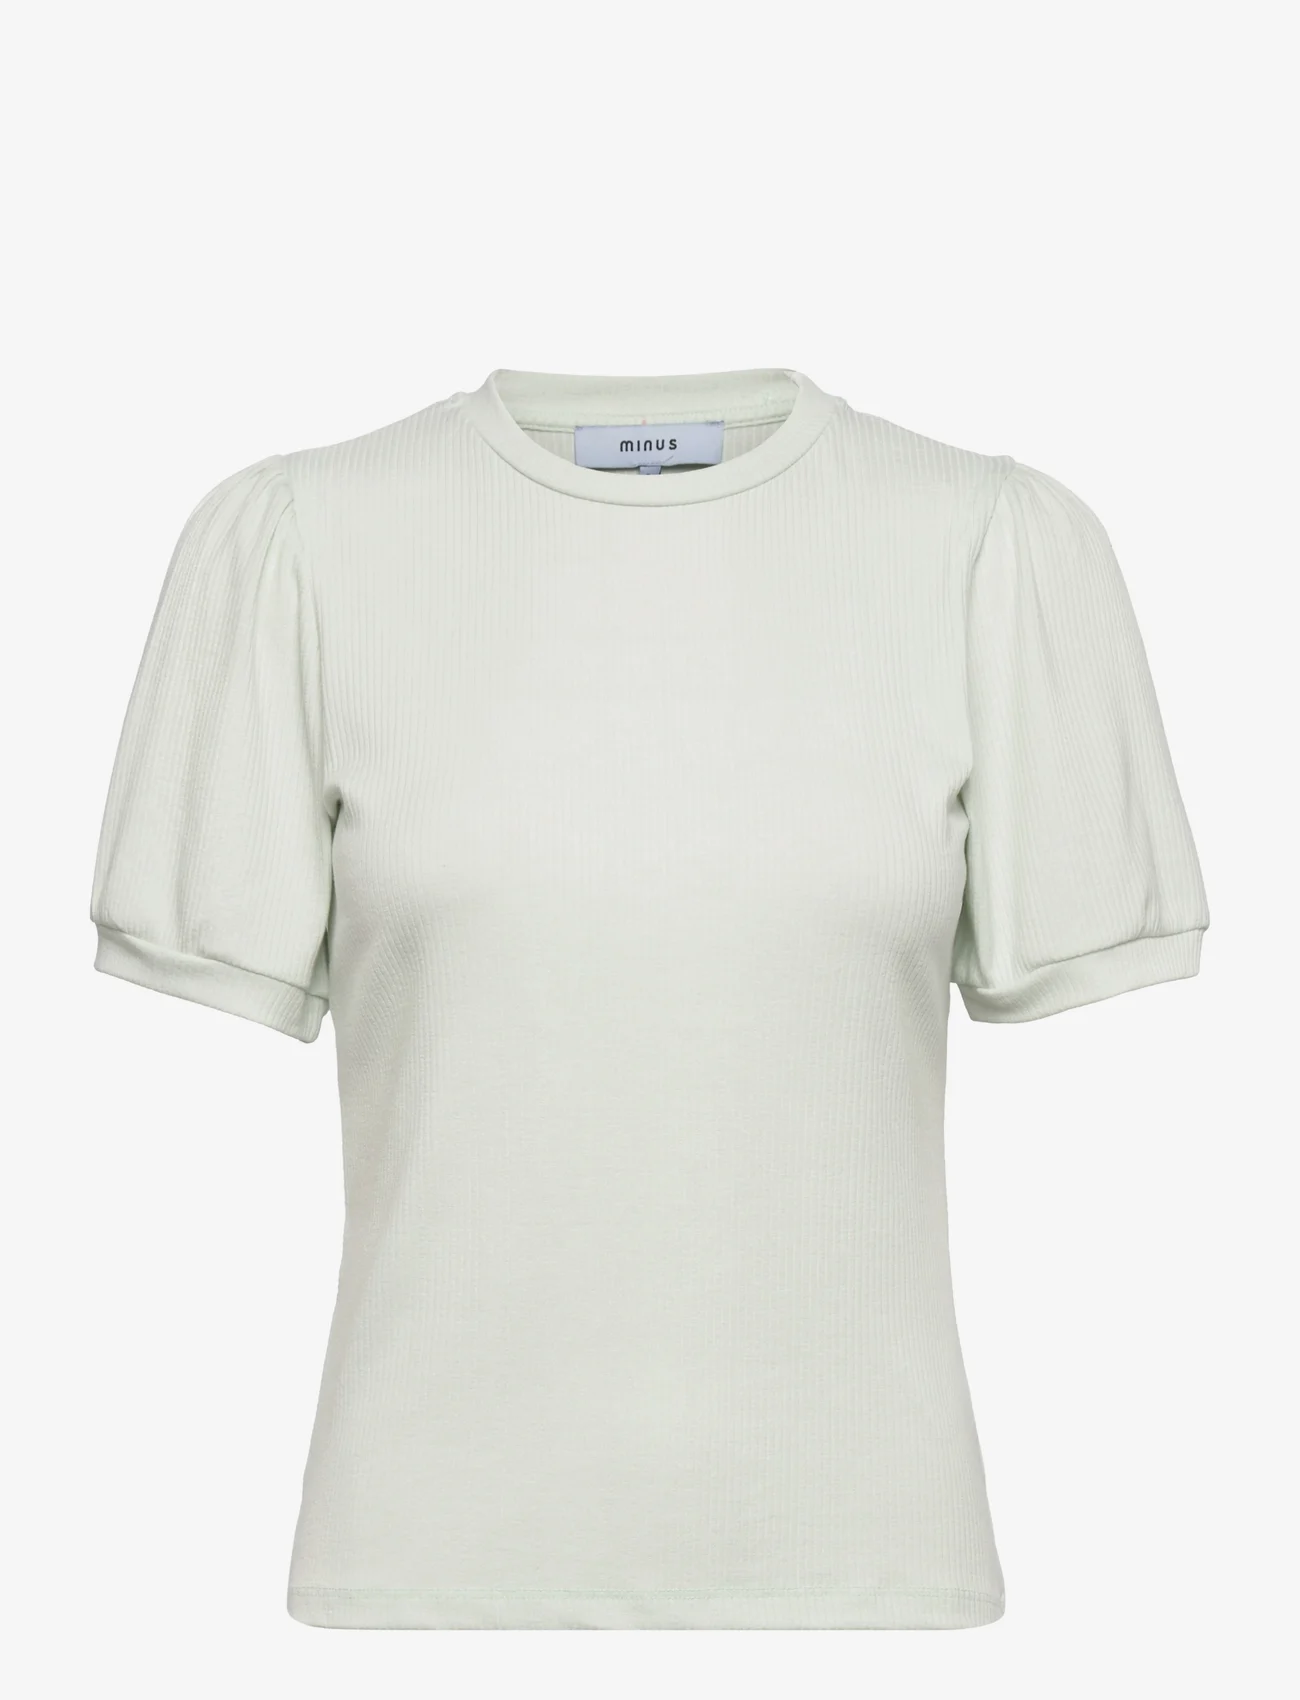 Minus - Johanna T-shirt - t-shirts - frosted mint - 0